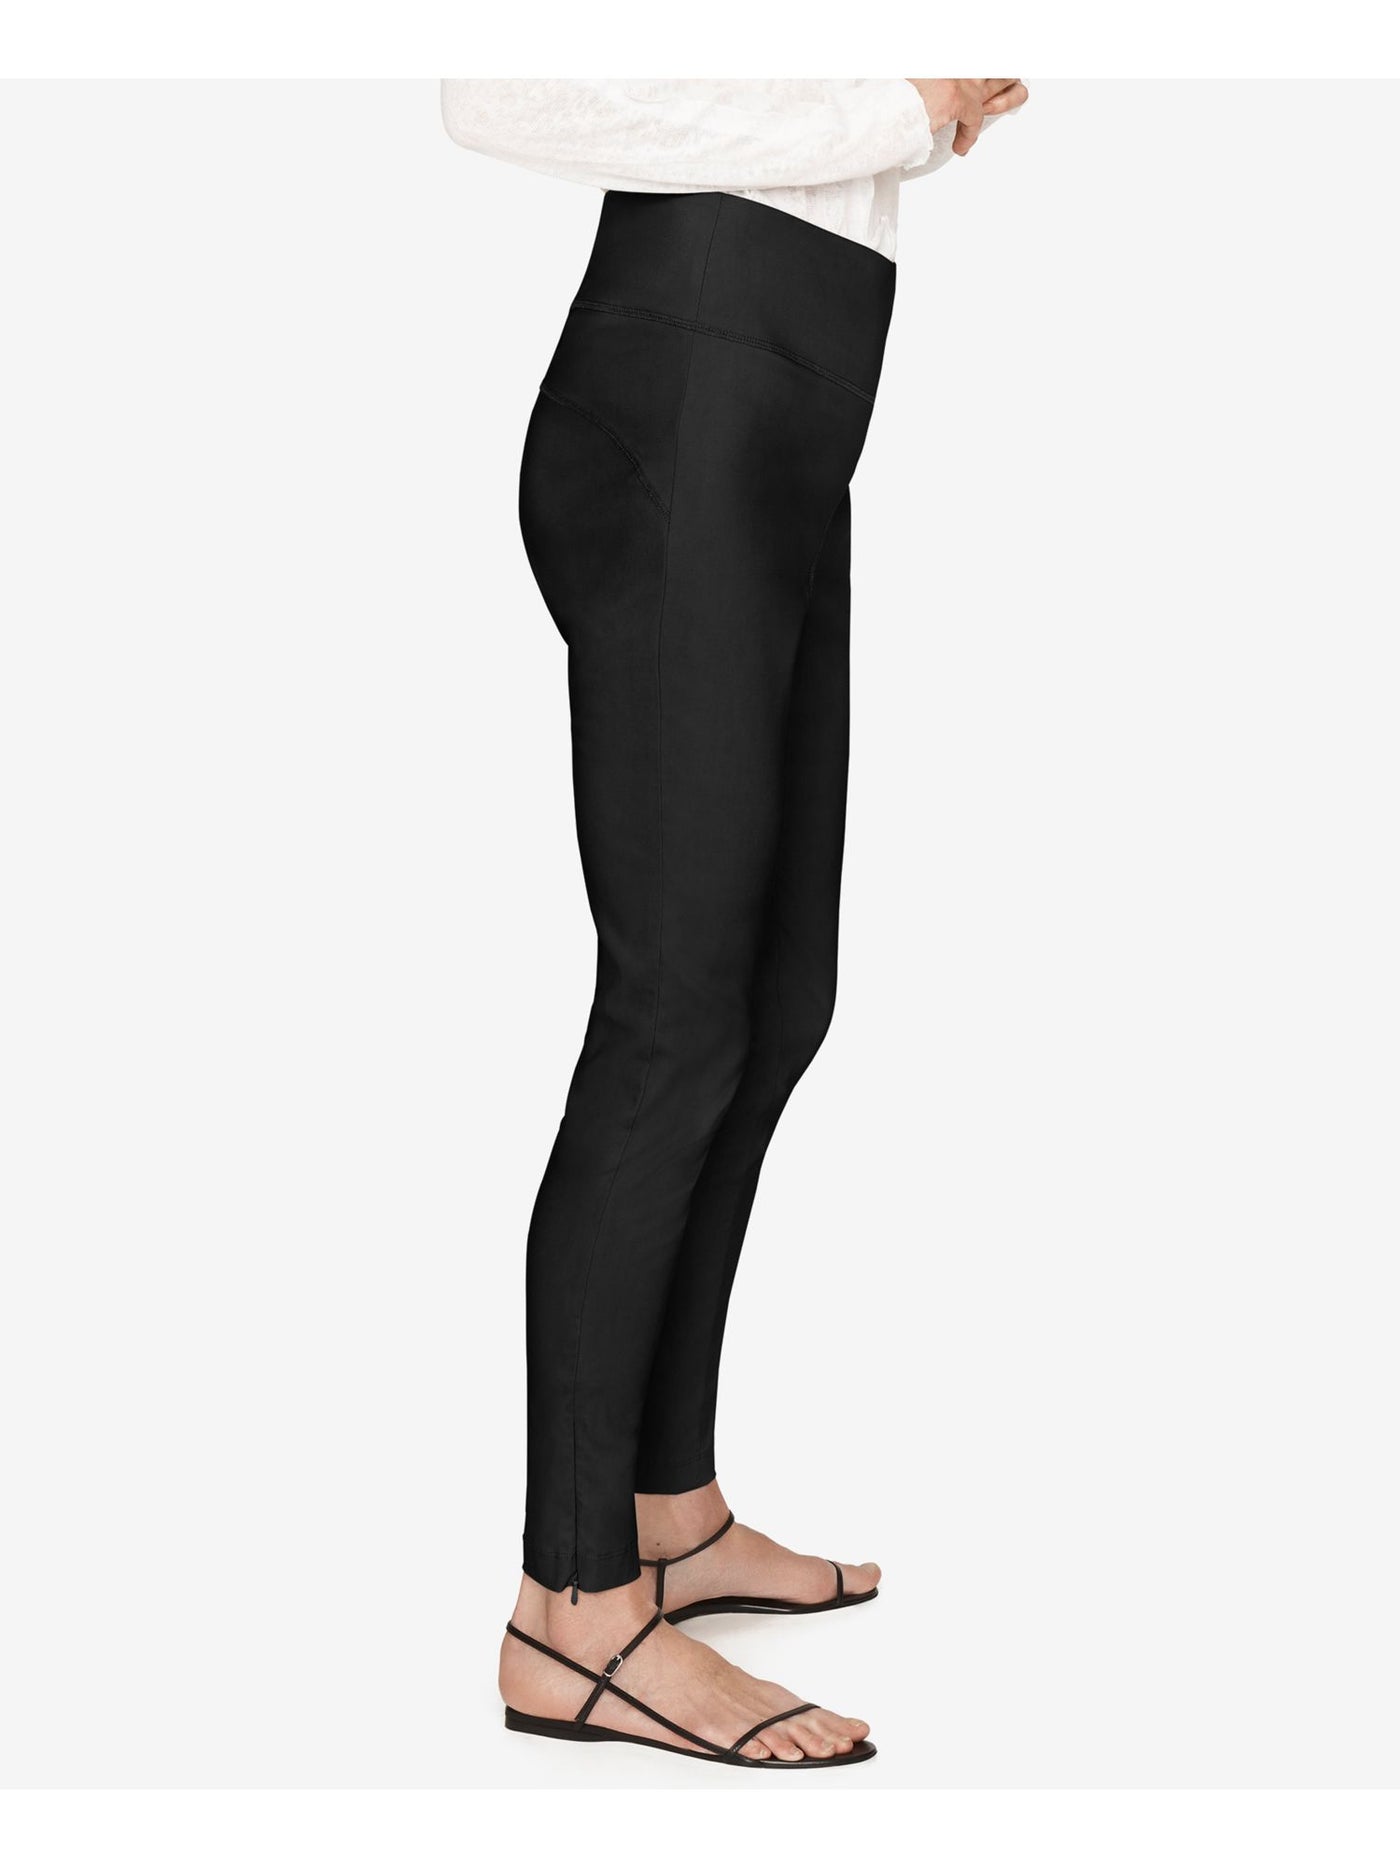 B NEW YORK Womens Black Stretch Wear To Work Leggings M